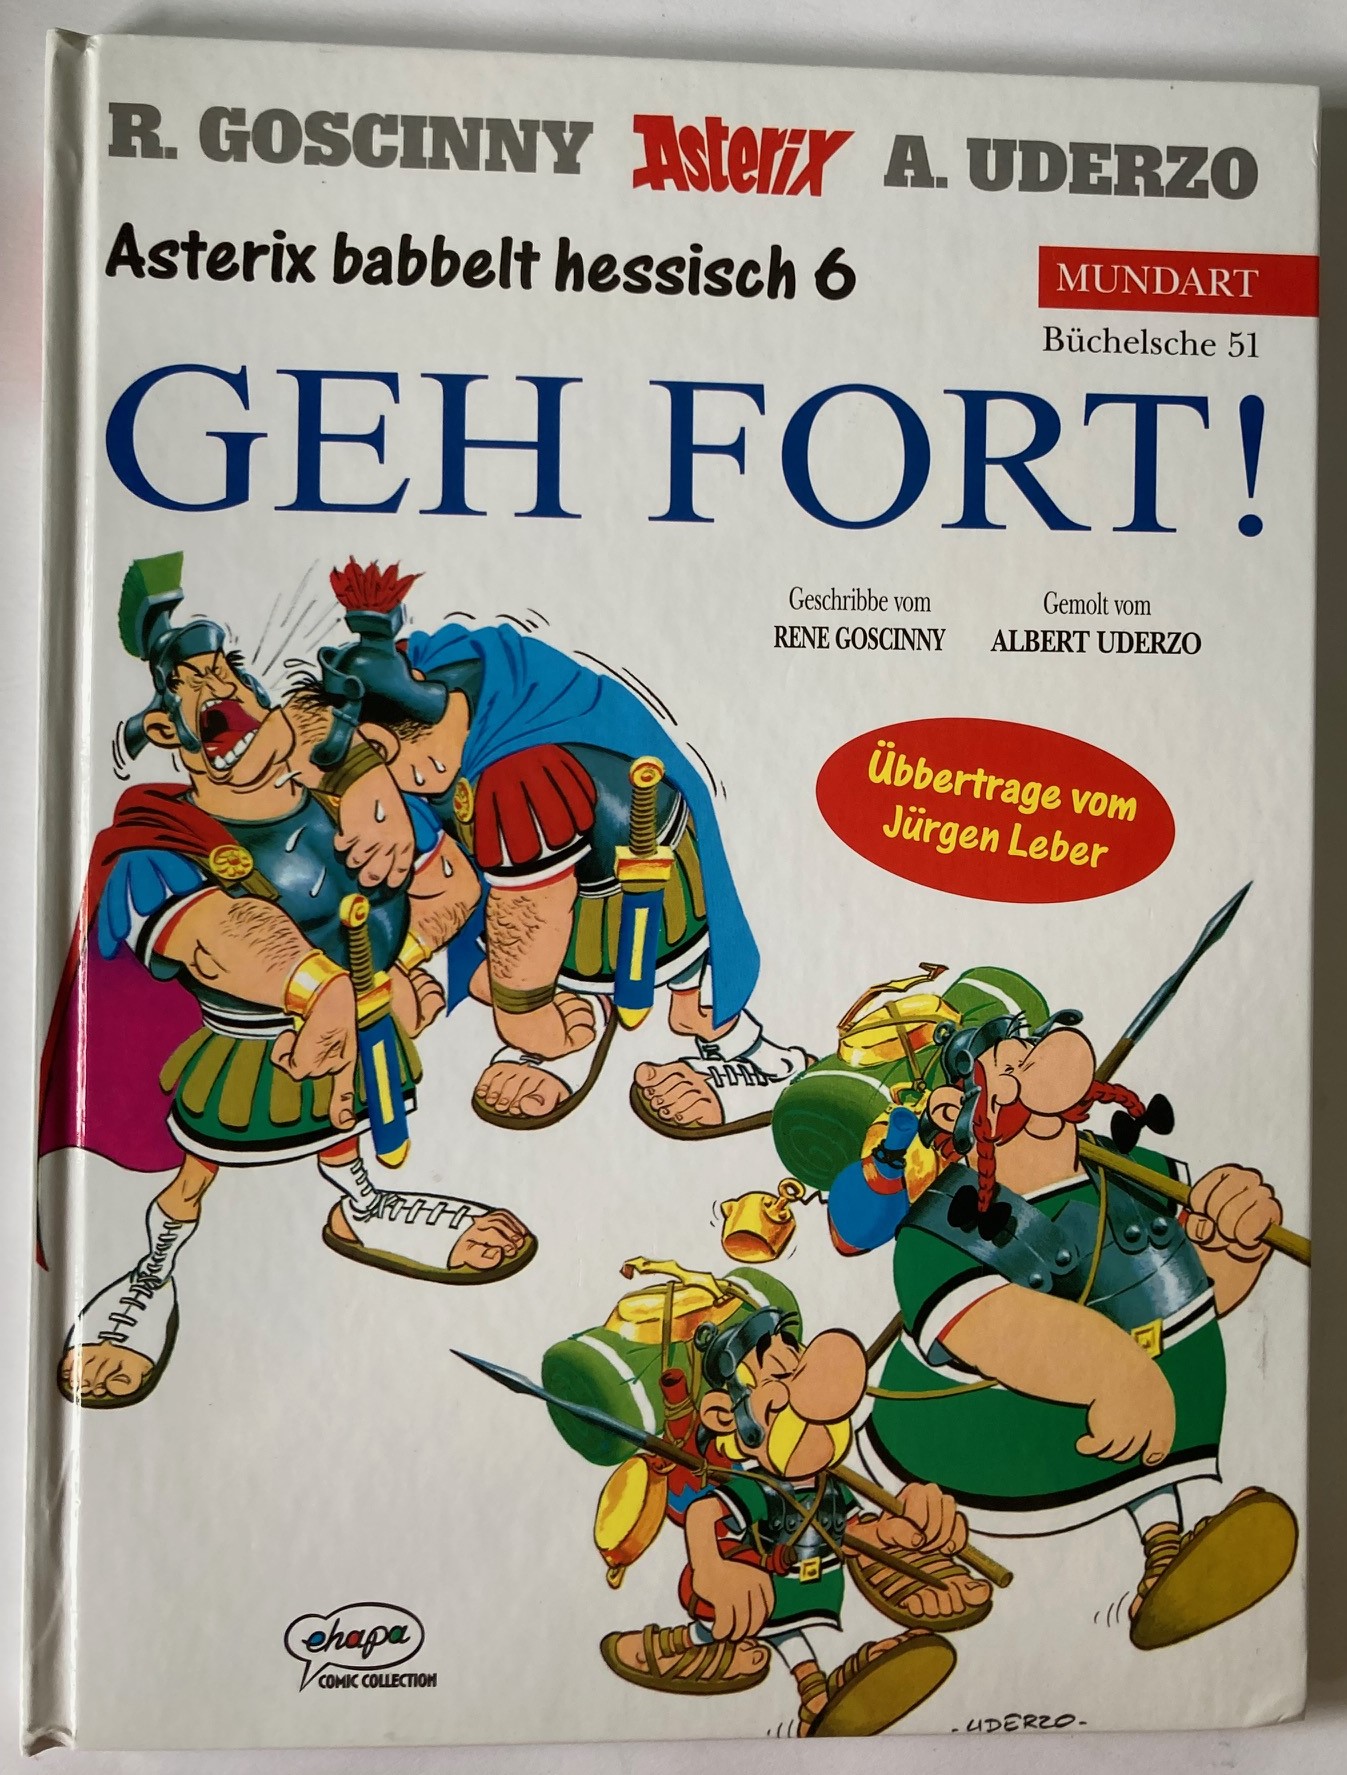 Leber, Jürgen/Goscinny, René/Uderzo, Albert  Asterix babbelt hessisch 6:  Geh fort! (Büchelsche 51) 